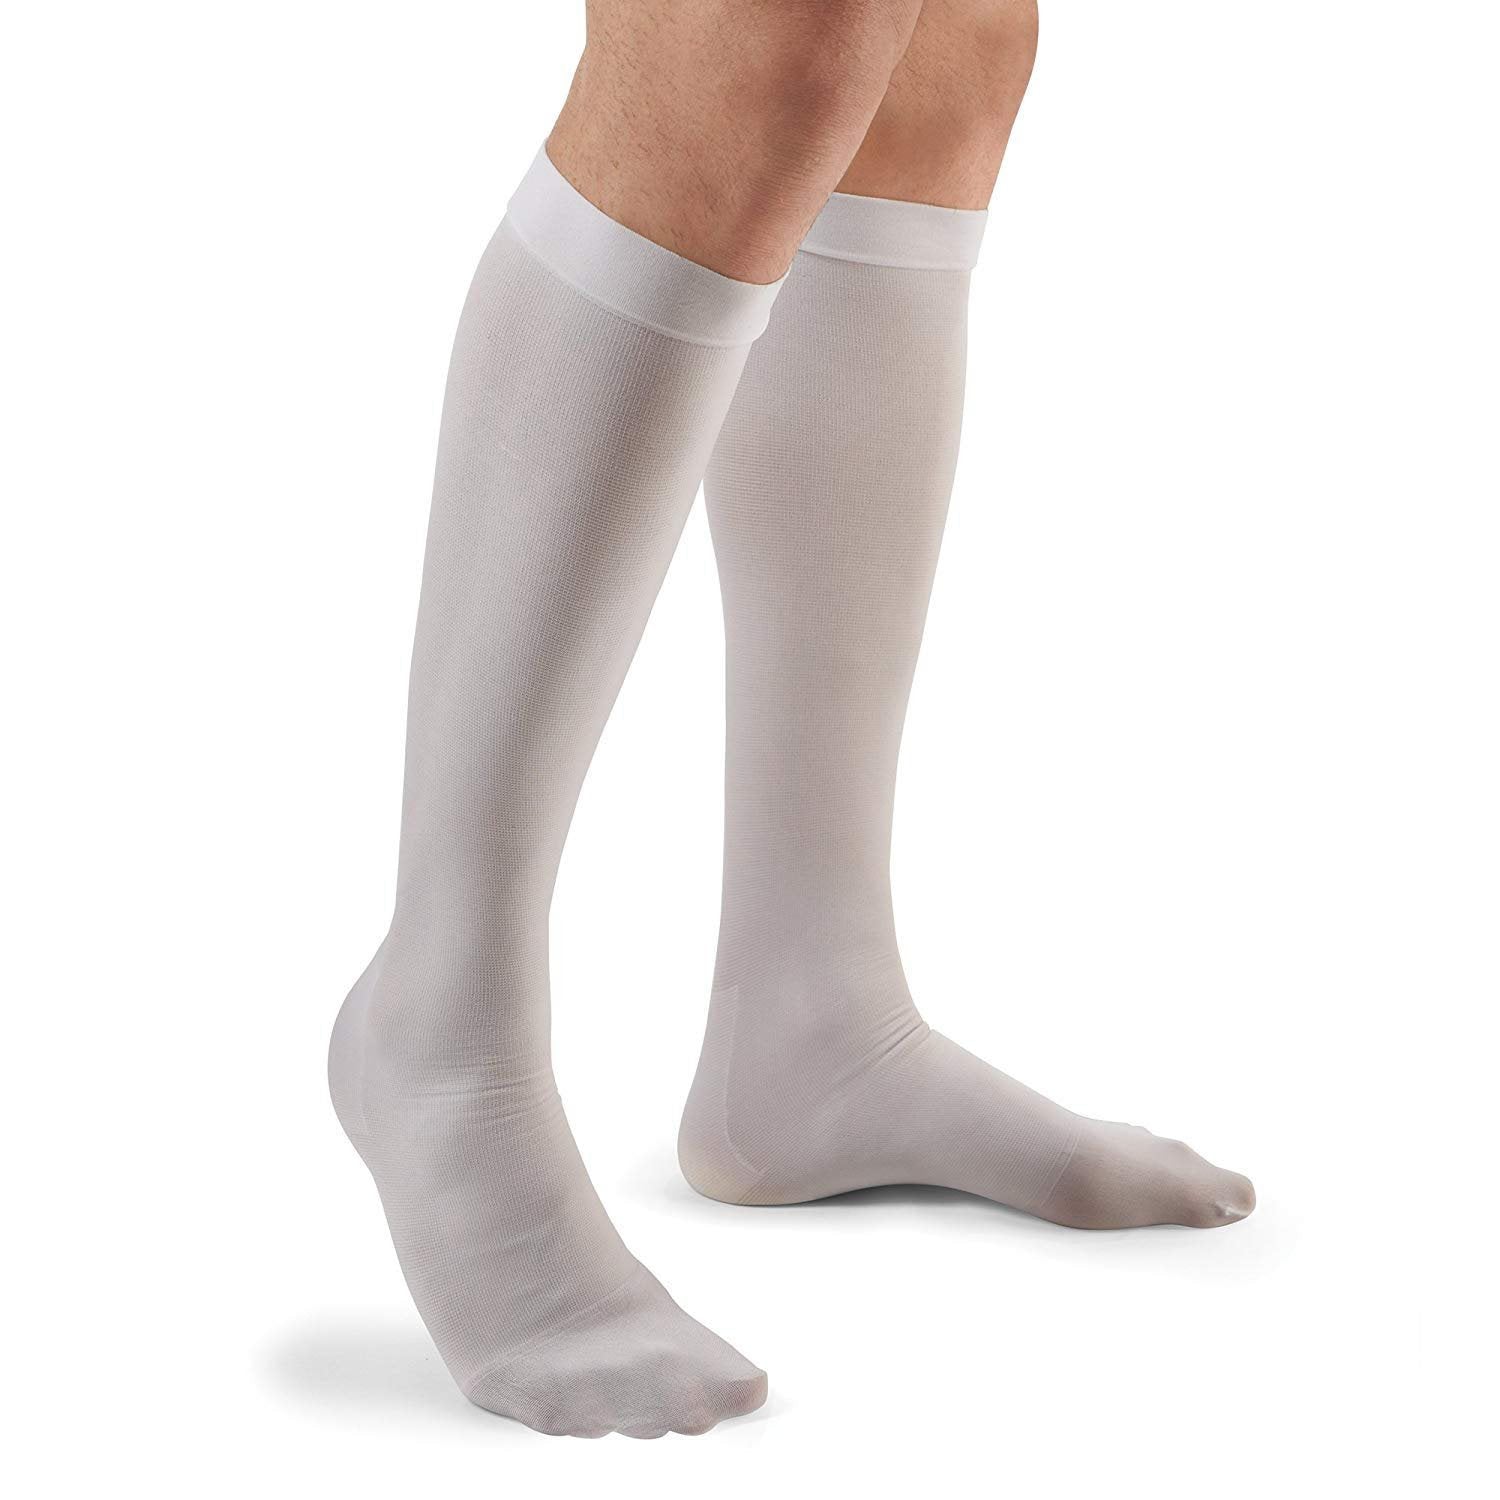 Anti-embolism Stocking 3M™ Futuro™ Knee High Medium / Regular White Closed Toe